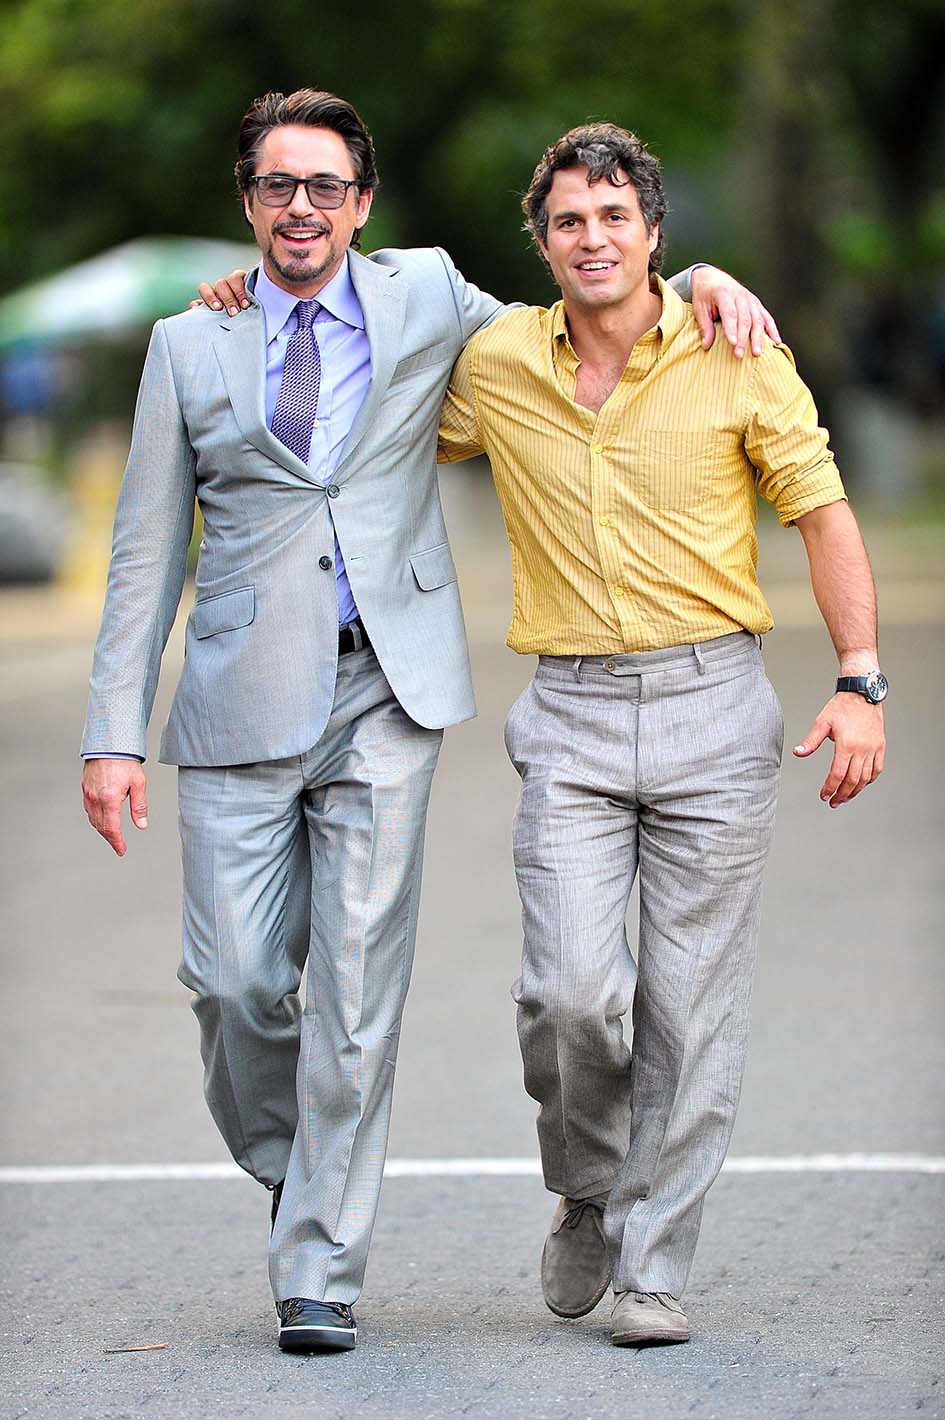 Oι Robert Downey Jr. και Mark Ruffalo την ώρα γυρίσματος της ταινίας "The Avengers" στο Central Park της Νέας Υόρκης στις 2 Σεπτεμβρίου 2011.